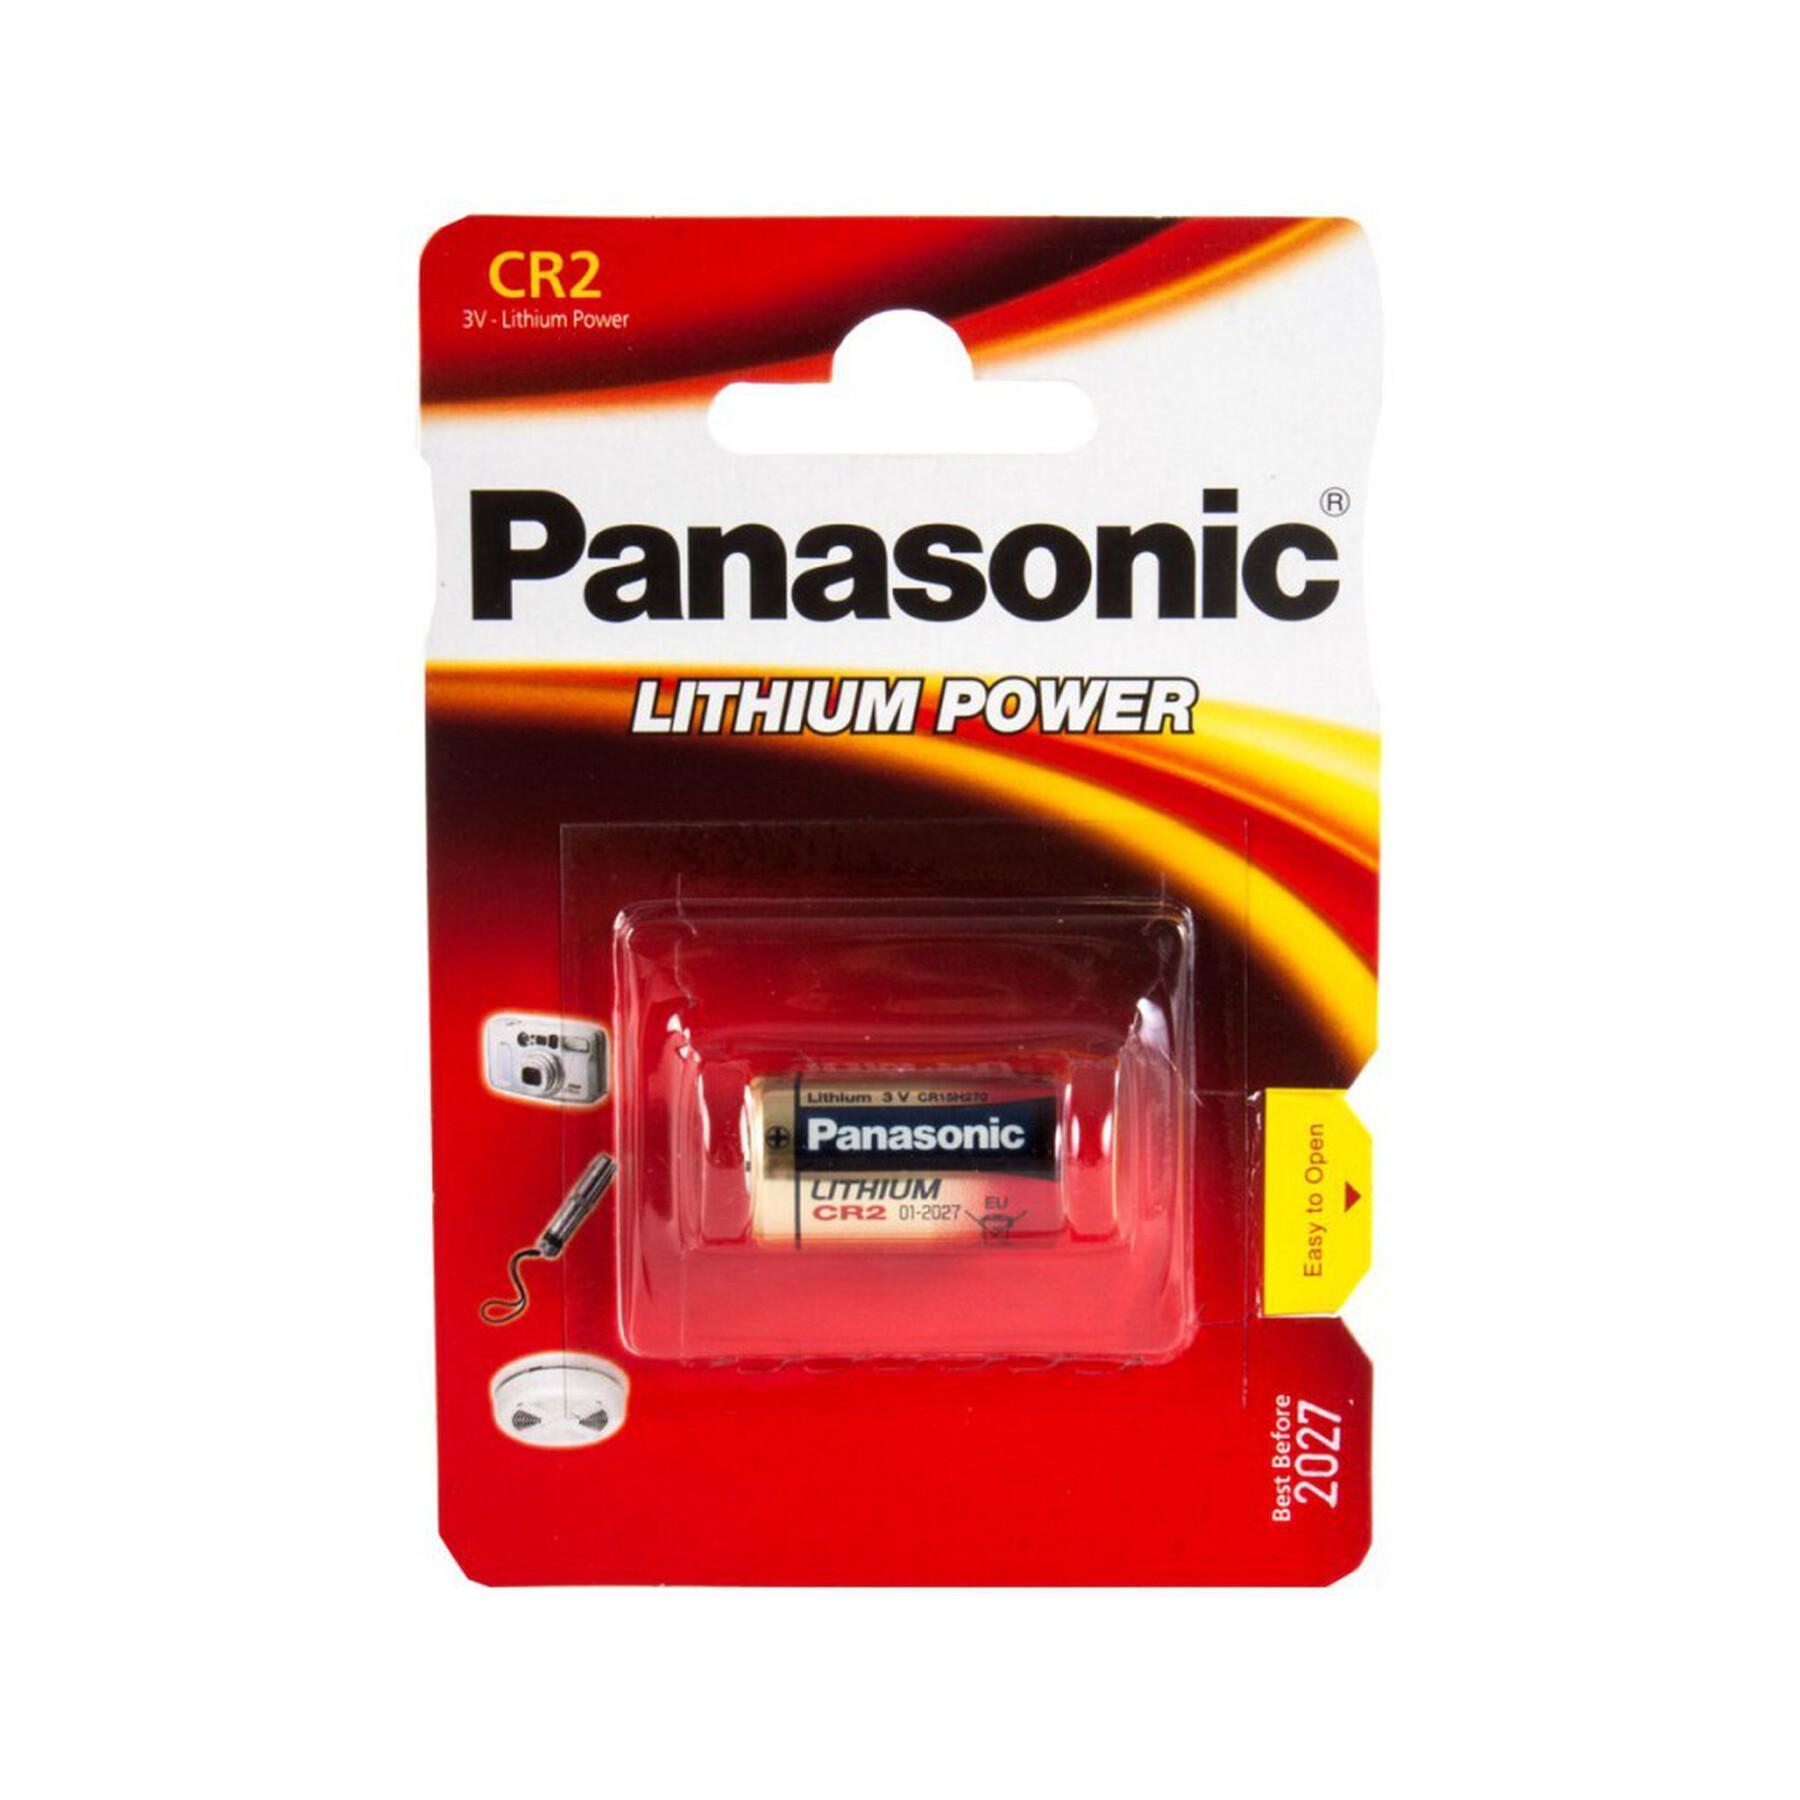 Panasonic battery for rangefinder